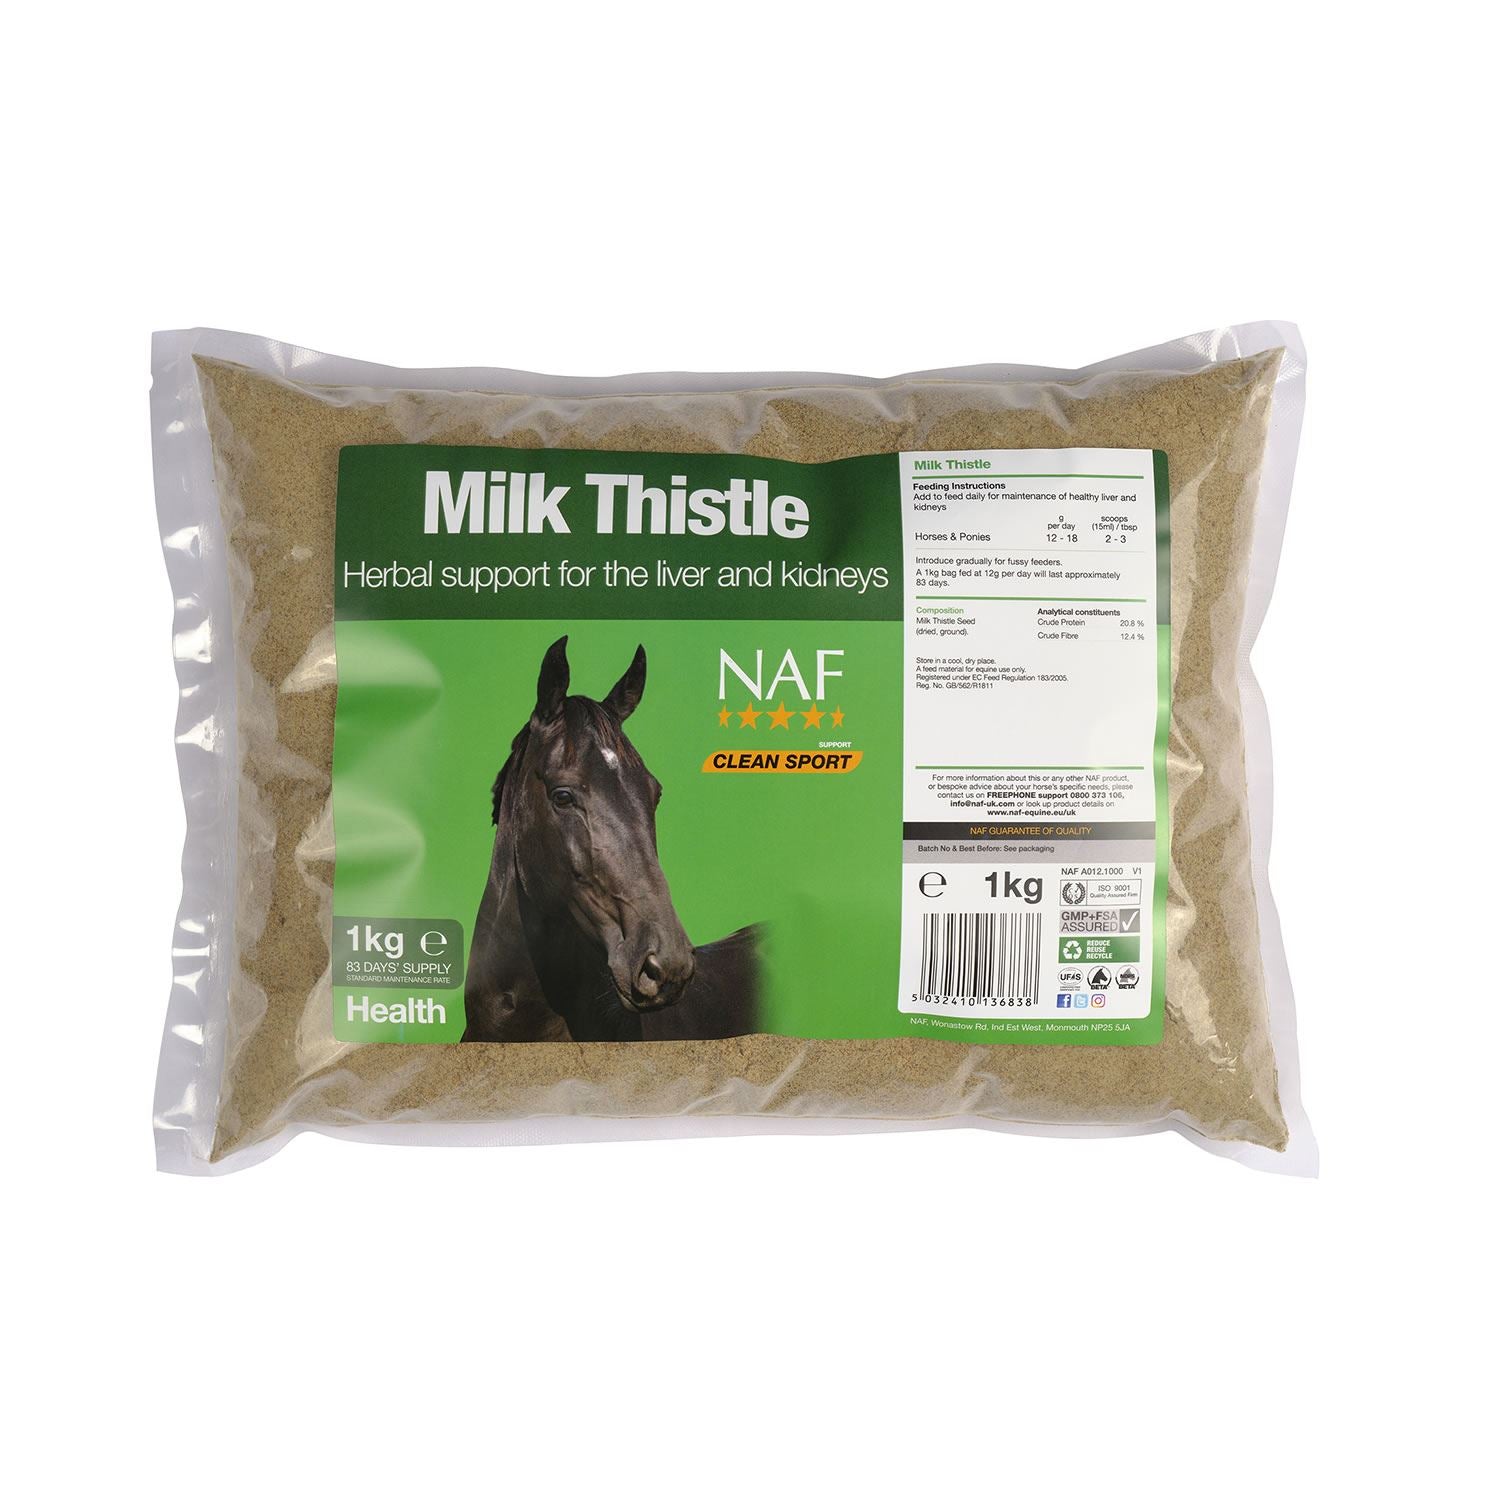 Naf Milk Thistle - Just Horse Riders